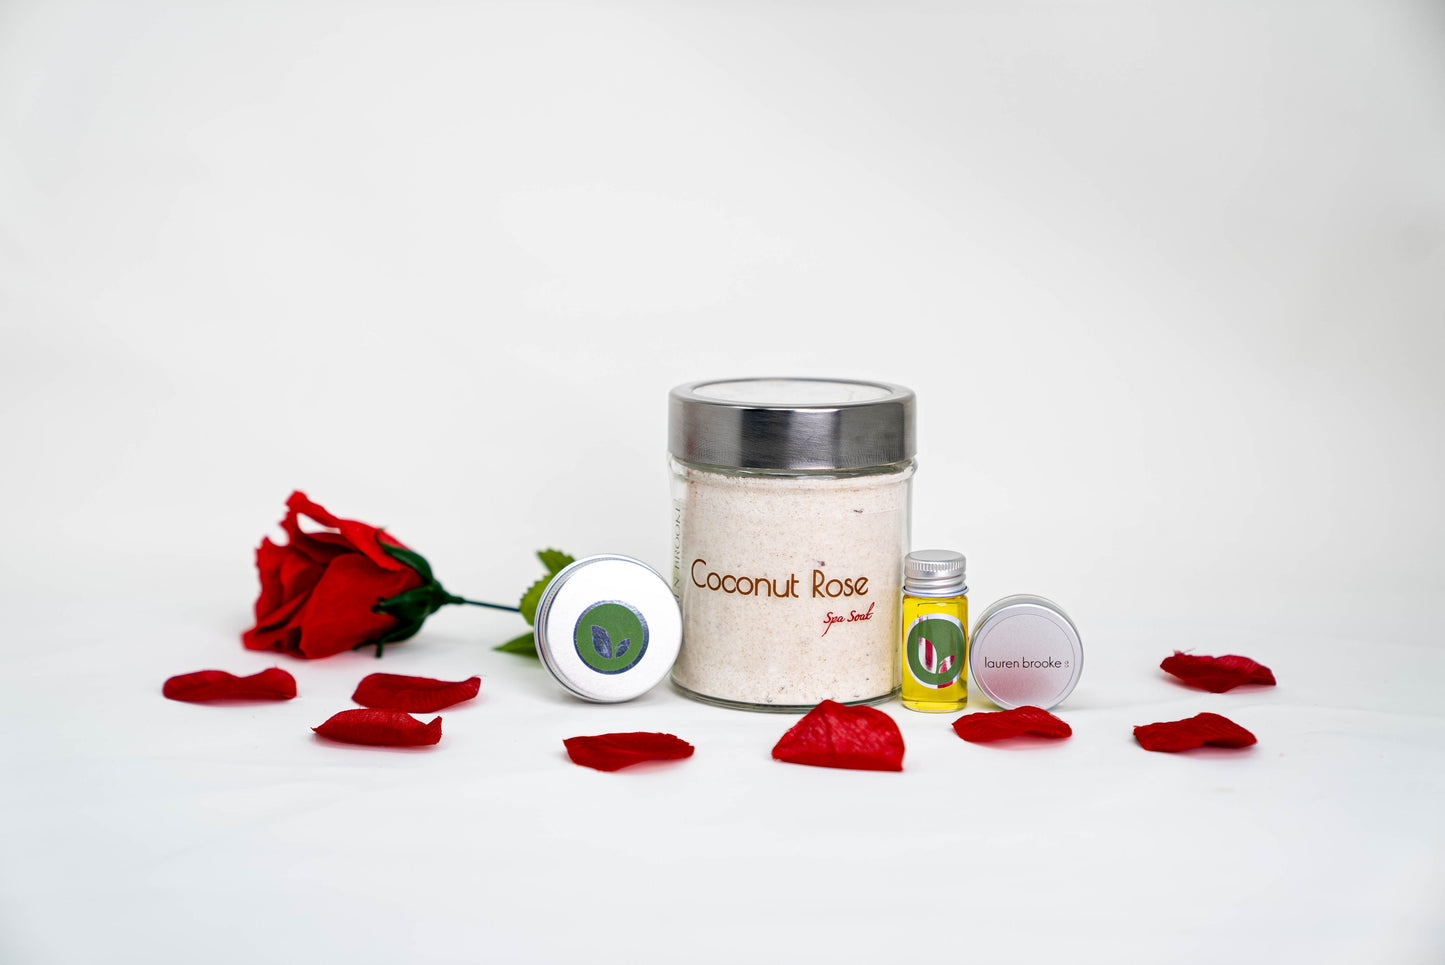 Roses and Chocolates Aromatherapy Kit 🍫